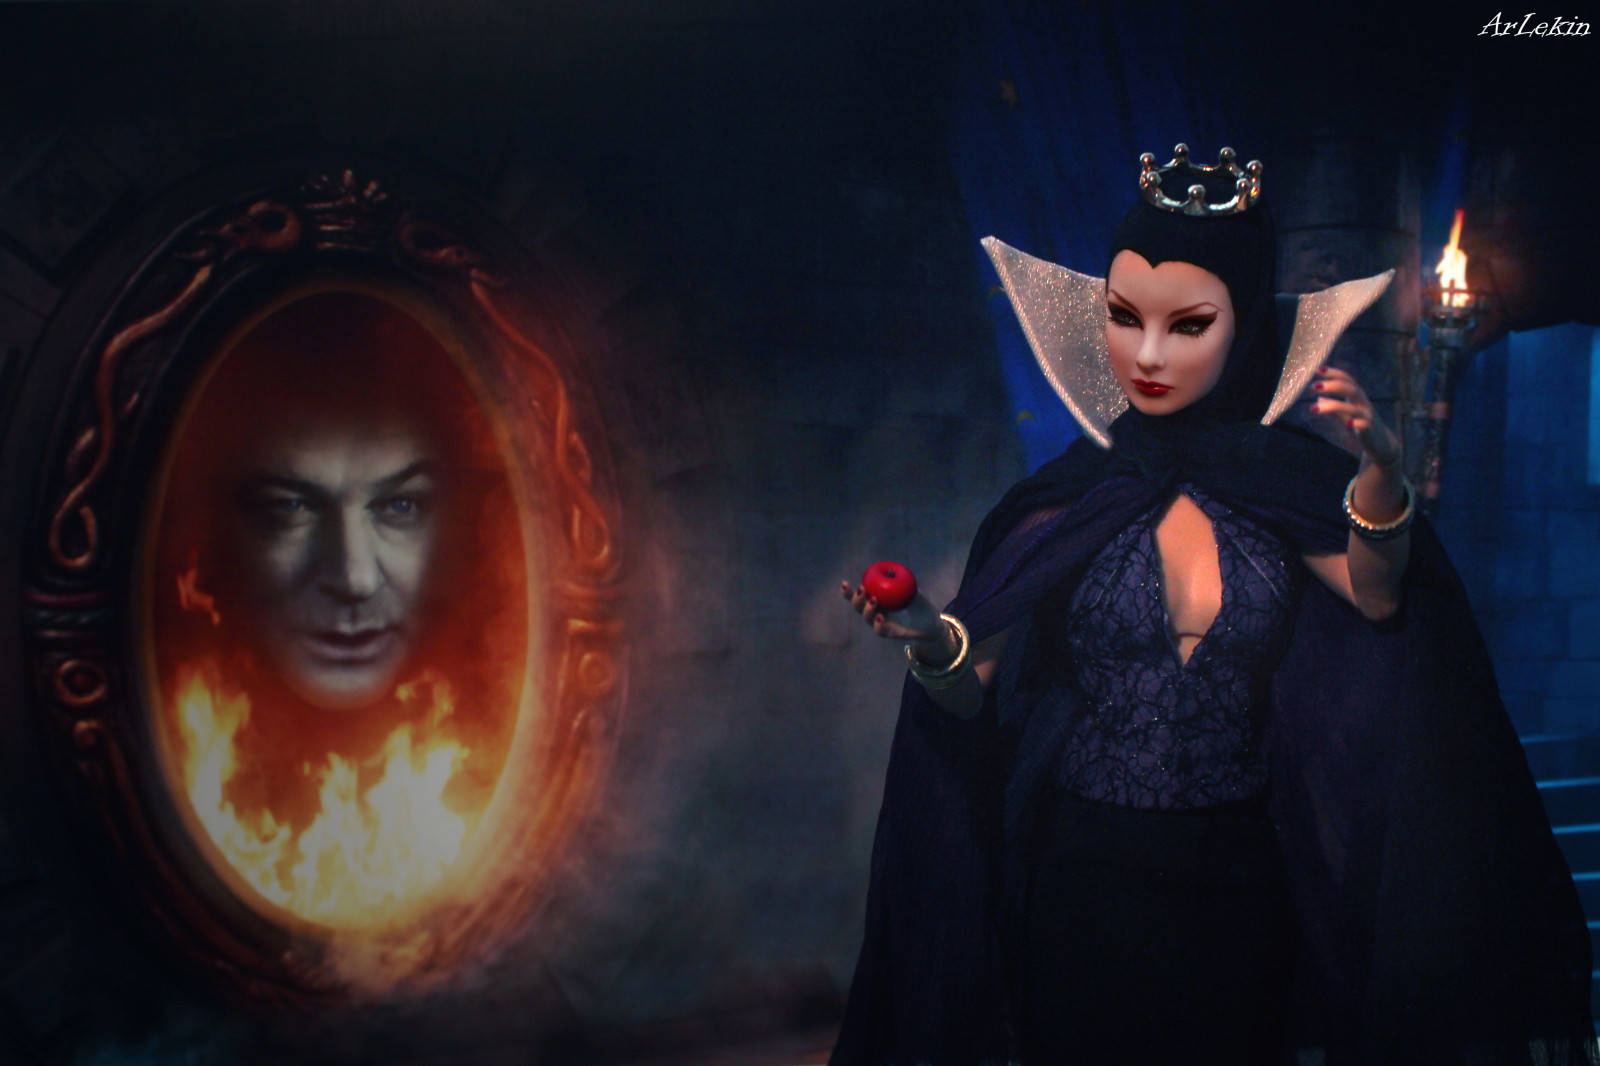 Disney Villain Maleficent With The Mirror Background